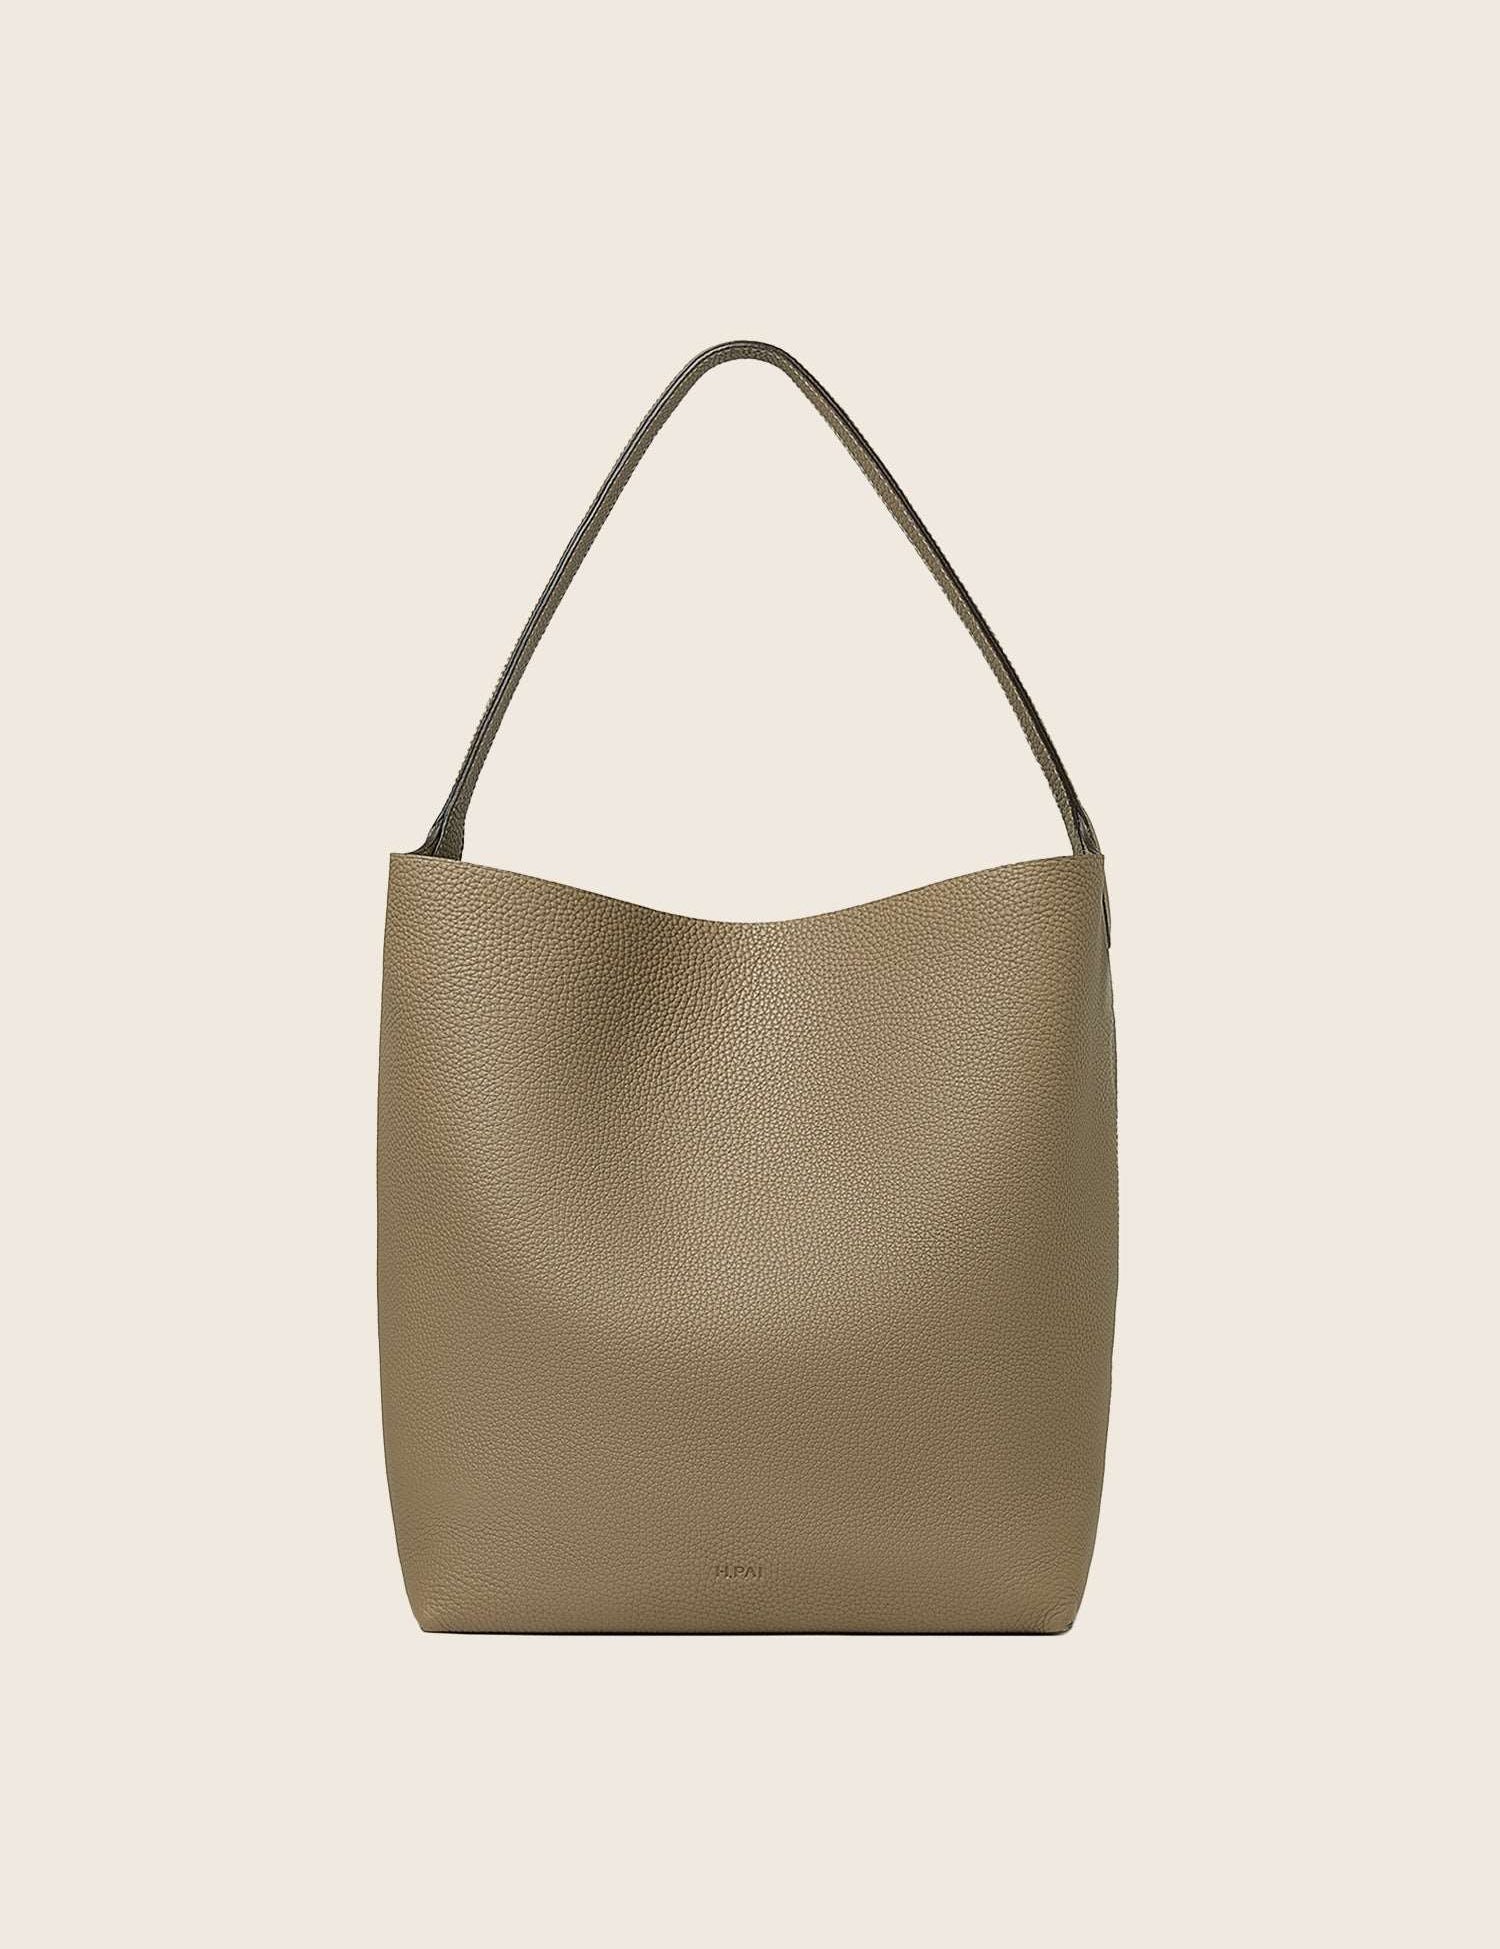 Hpai Medium Binah Bucket Bag in Leather - Limestone